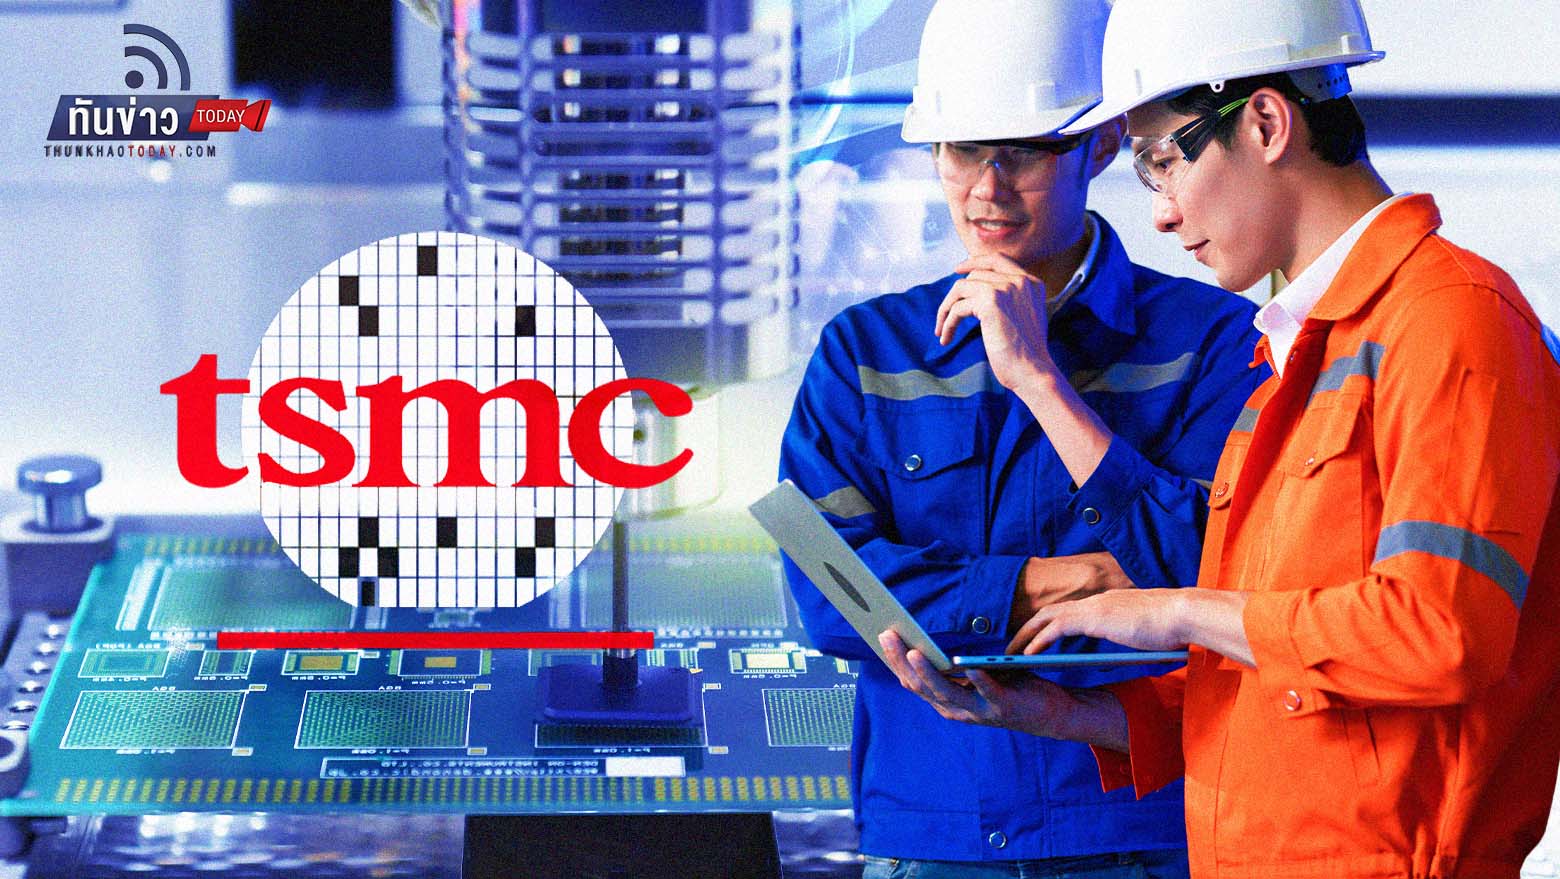 TSMC บริษัทผลิตชิปยักษ์ใหญ่ของโลกจากไต้หวัน ประกาศรับ วิศวกร 6,000 คน เงินเดือนกว่า 2.2 ล้านบาท